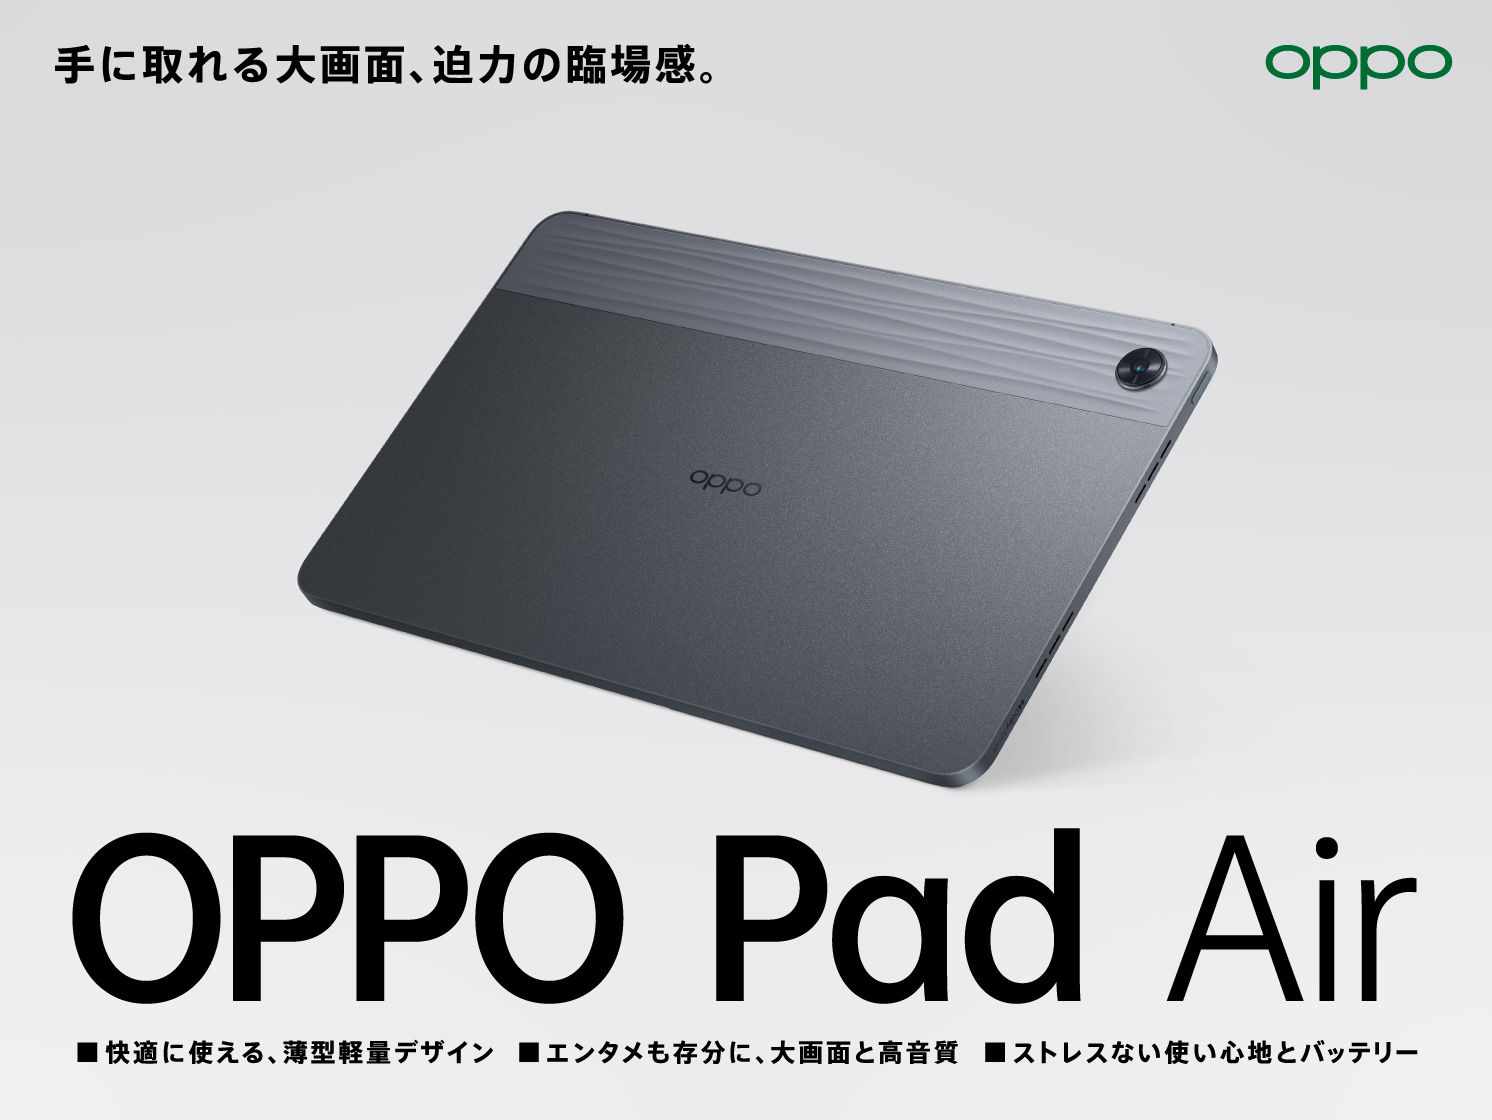 OPPOから“初”のタブレットデバイスが登場 「OPPO Pad Air」、9月30日 